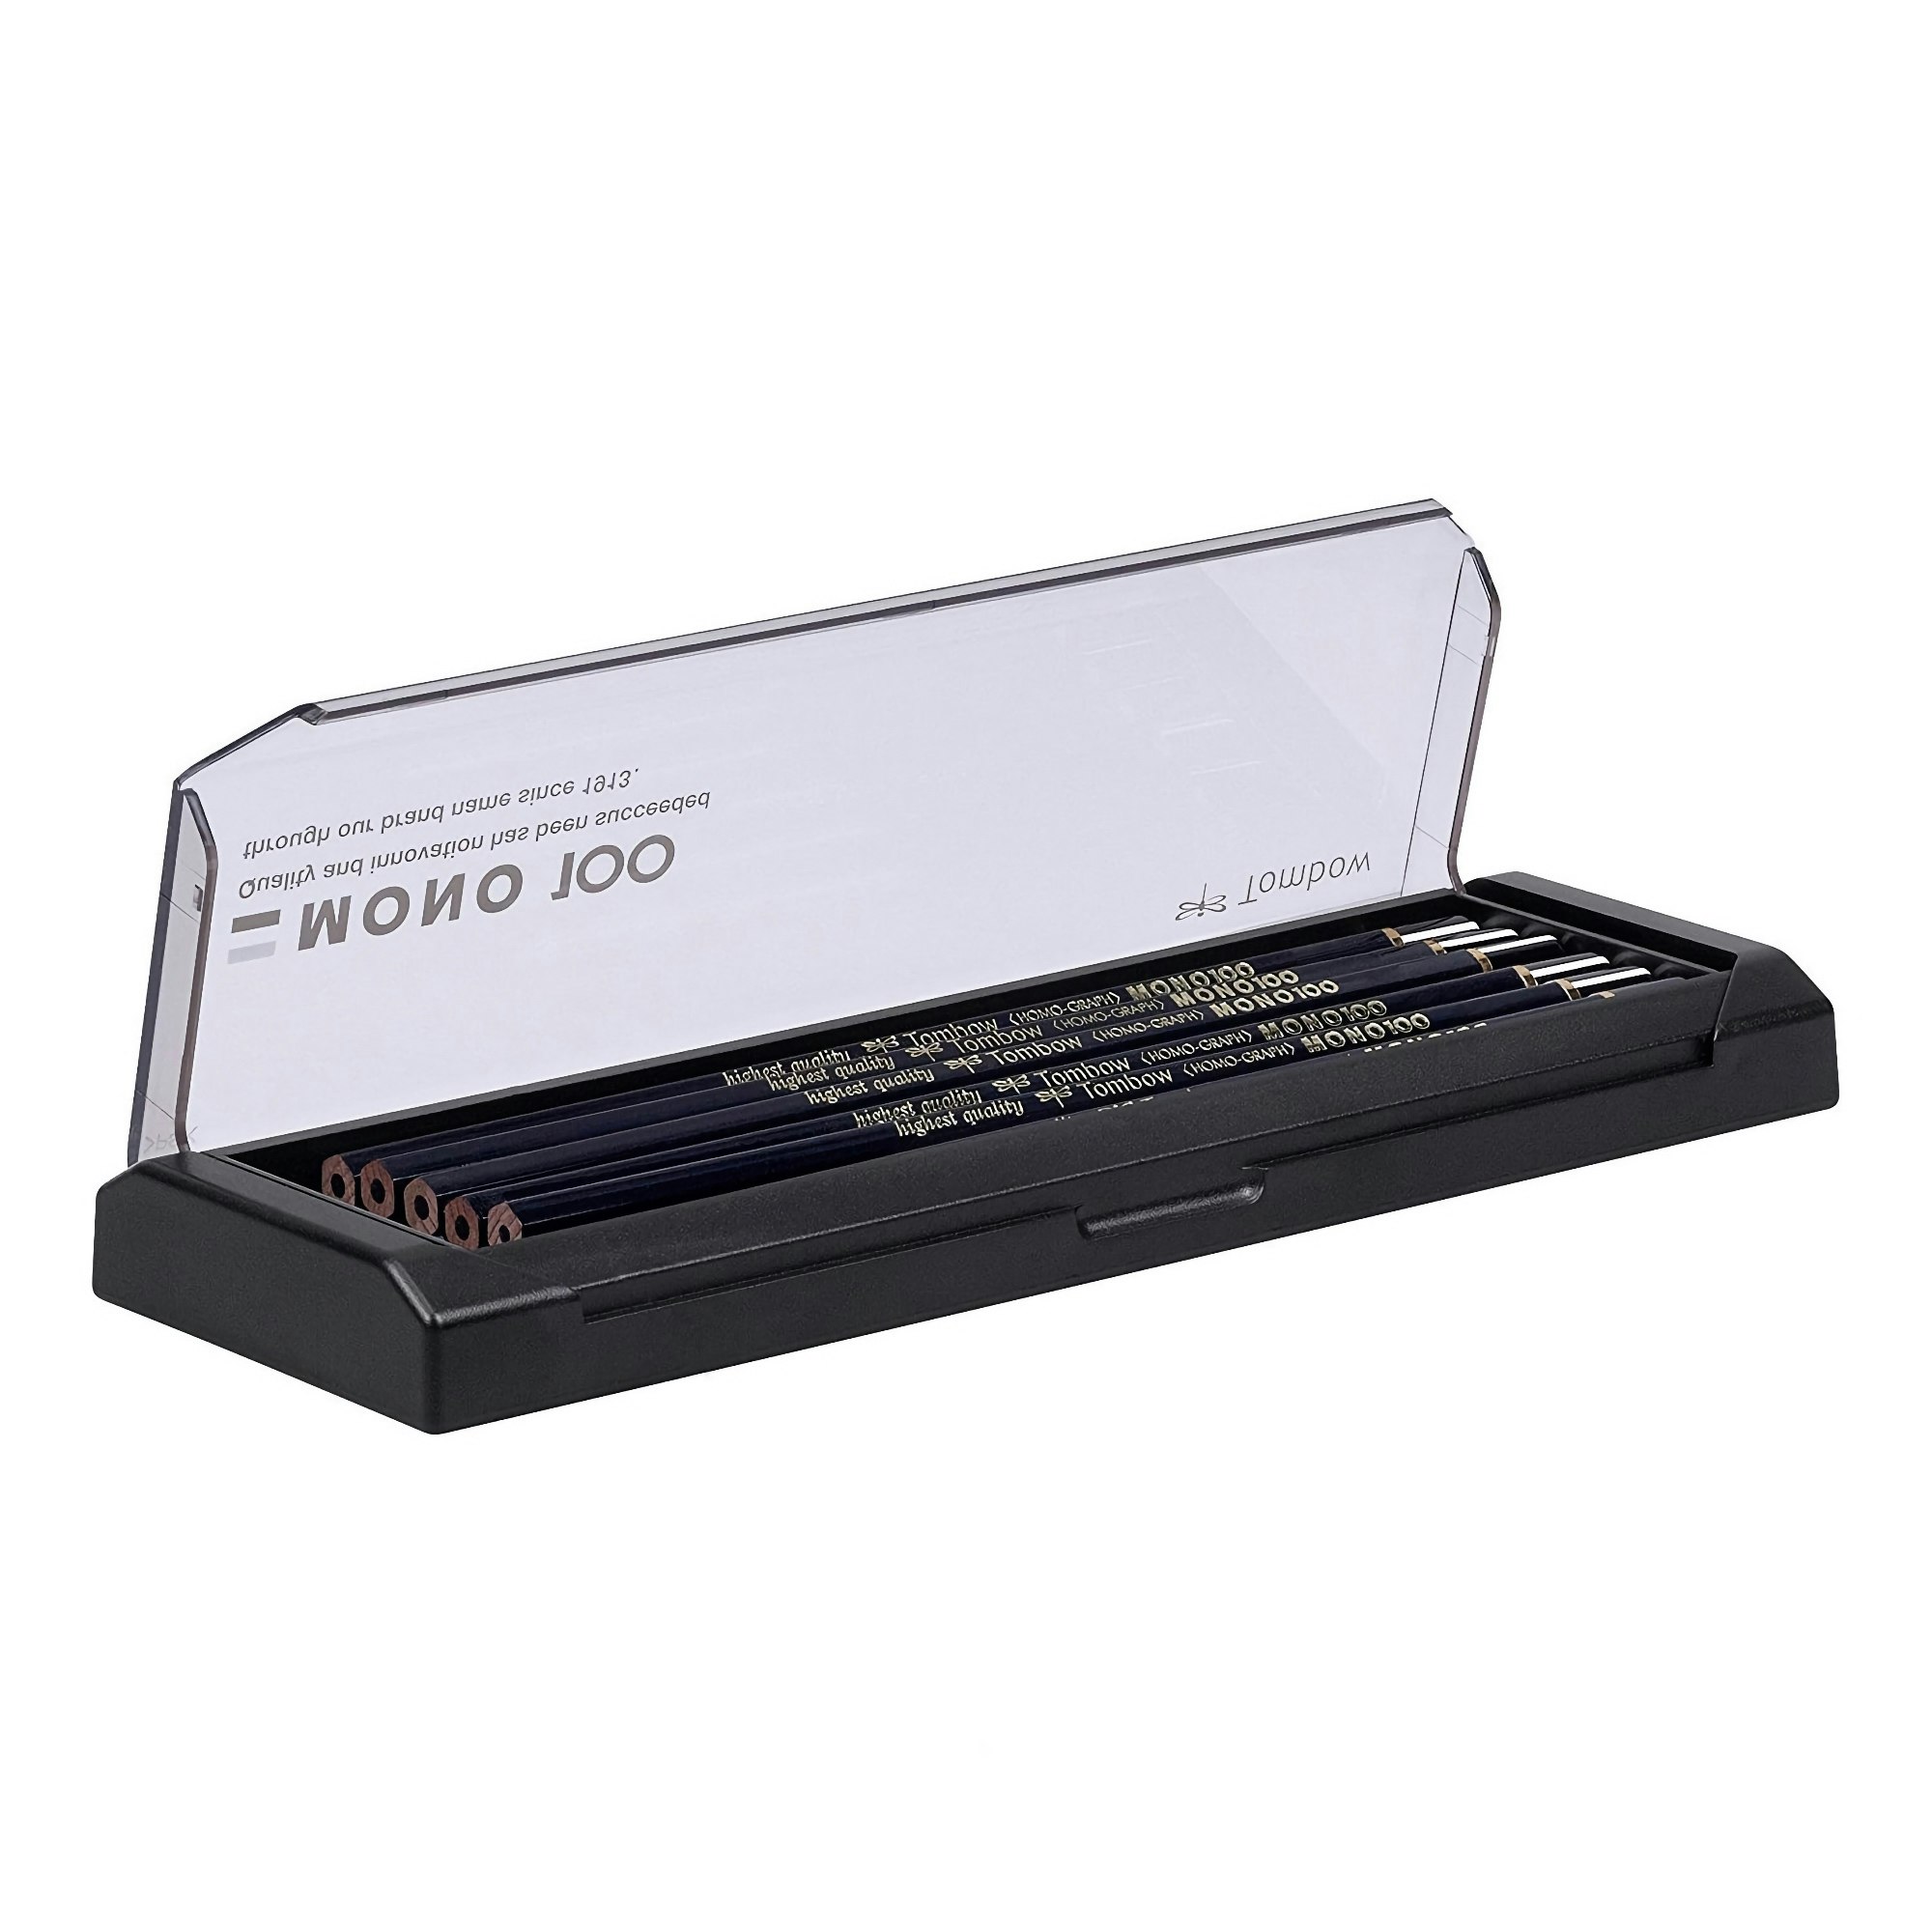 Tombow Mono 100 Pencil – 2B – set om 12